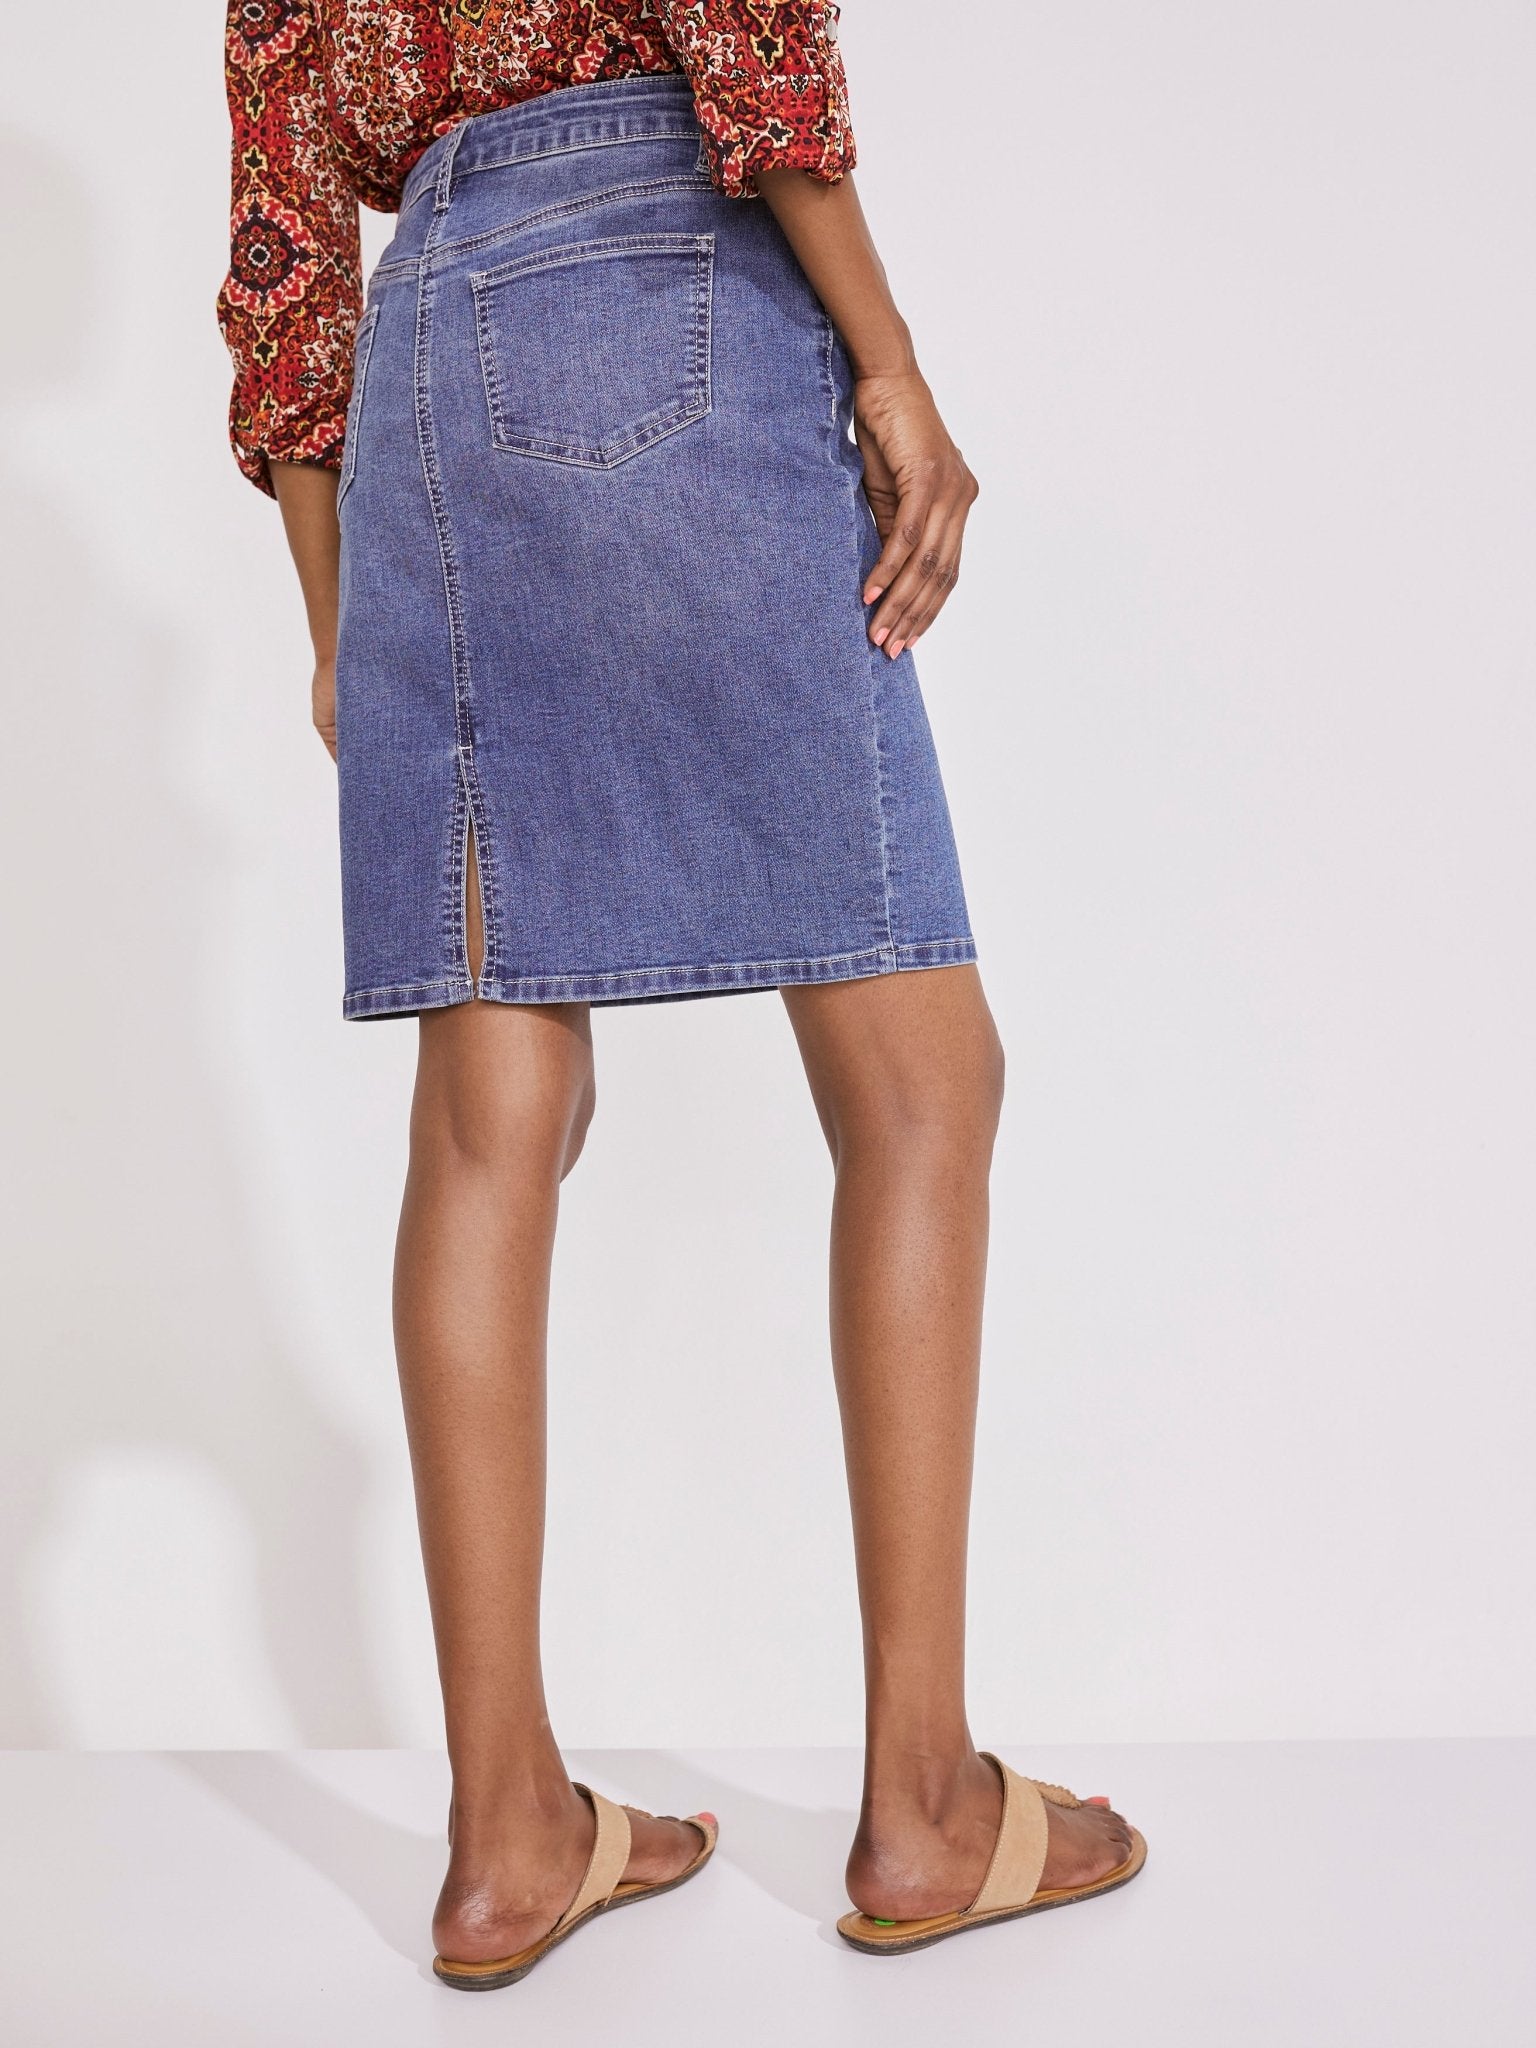 Westport Signature Denim Skirt with Back Slit - DressbarnSkirts